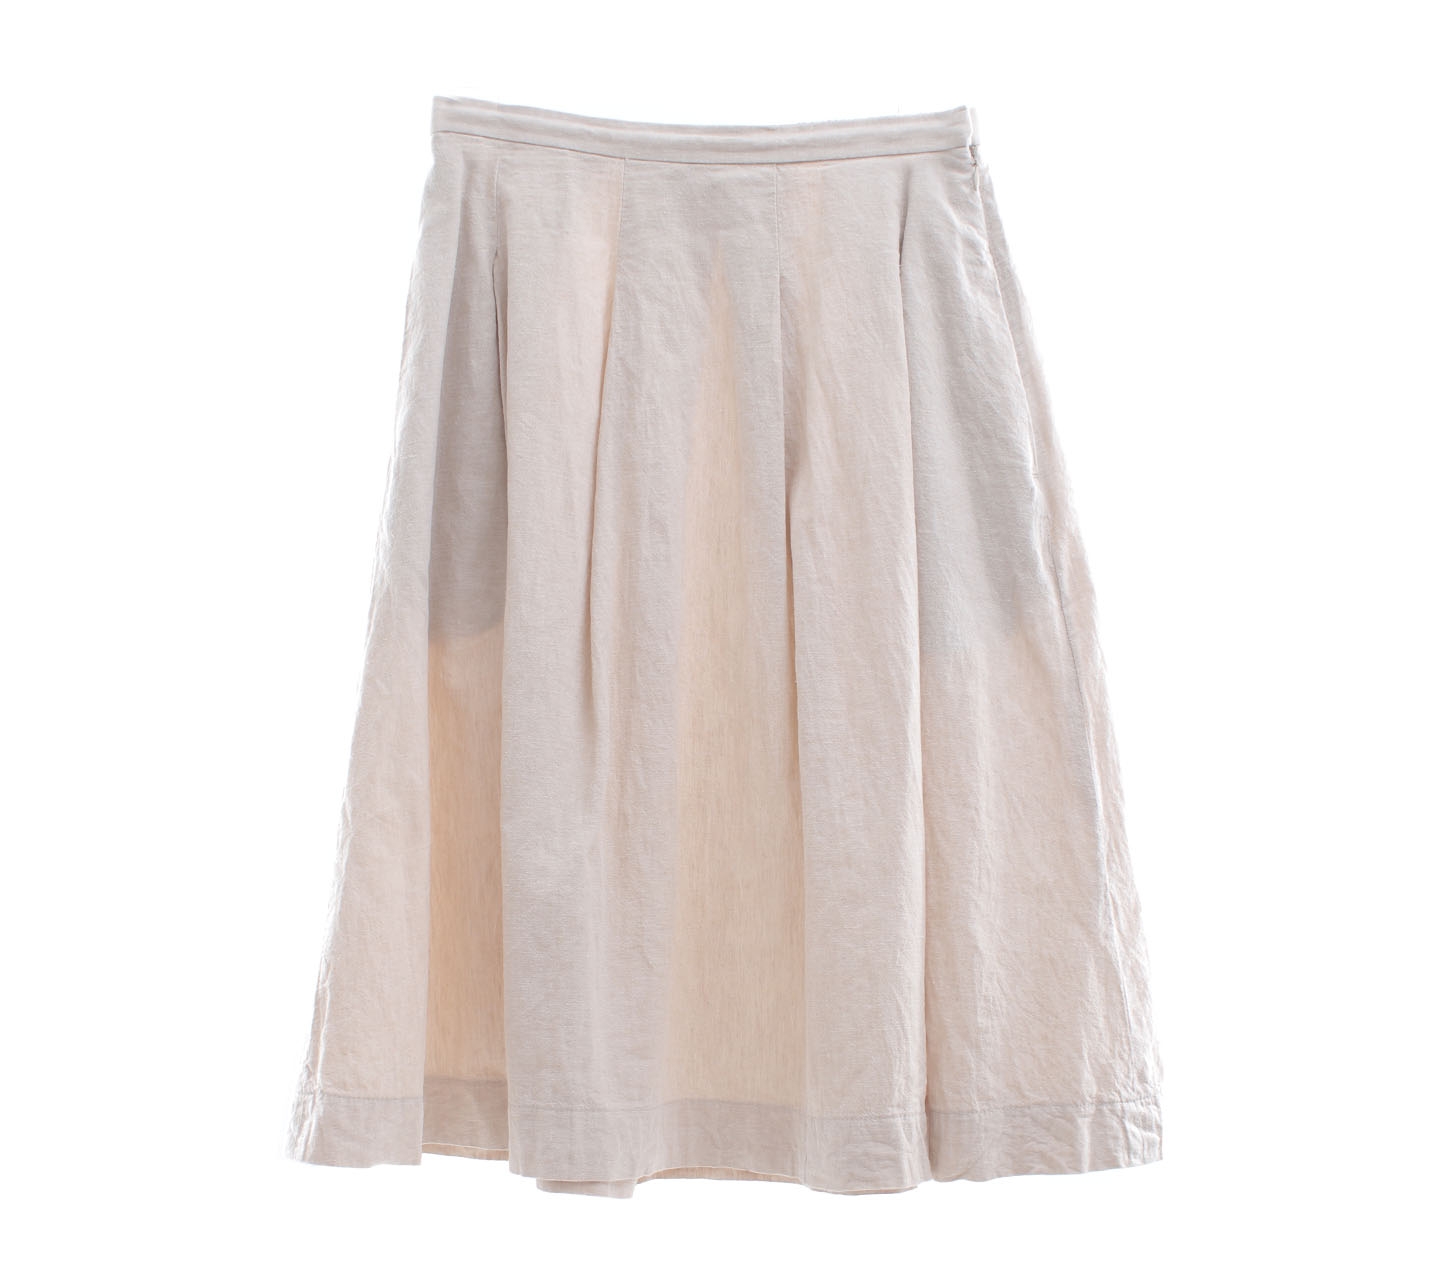 Uniqlo Cream Mini Skirt